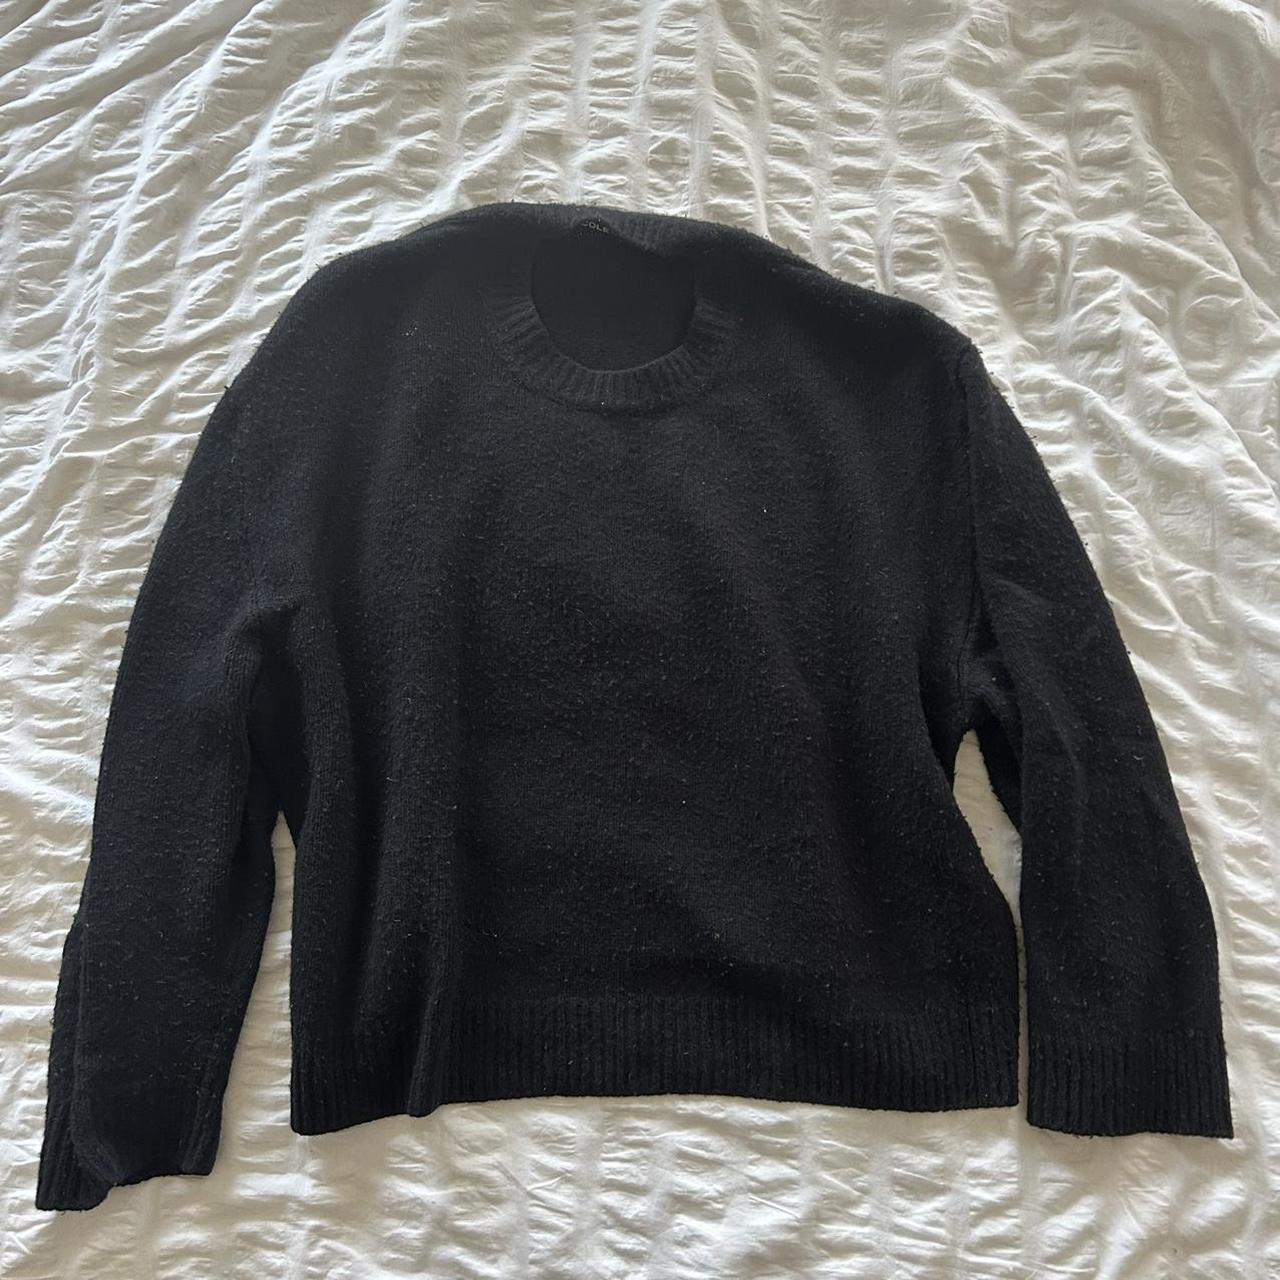 Black Cole Buxton knitted sweater Merino wool 10/10... - Depop